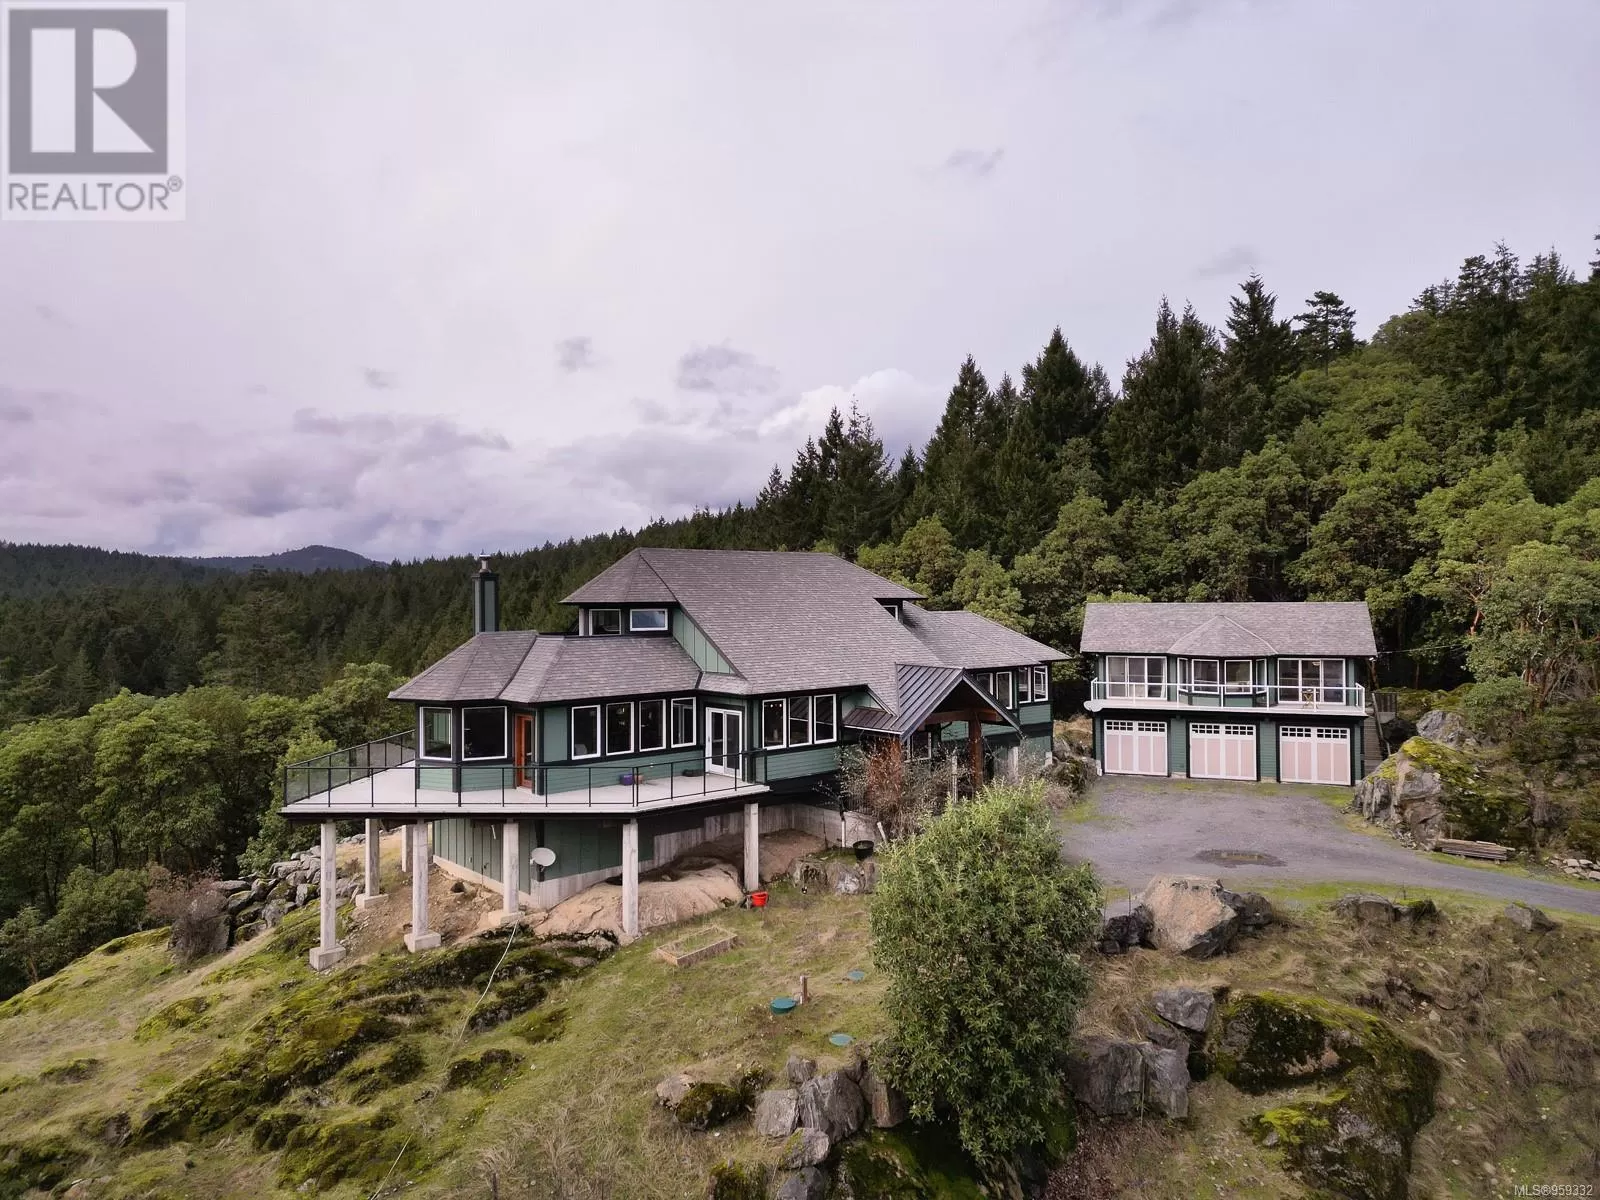 House for rent: 4750 Talon Ridge, Highlands, British Columbia V9E 1G6